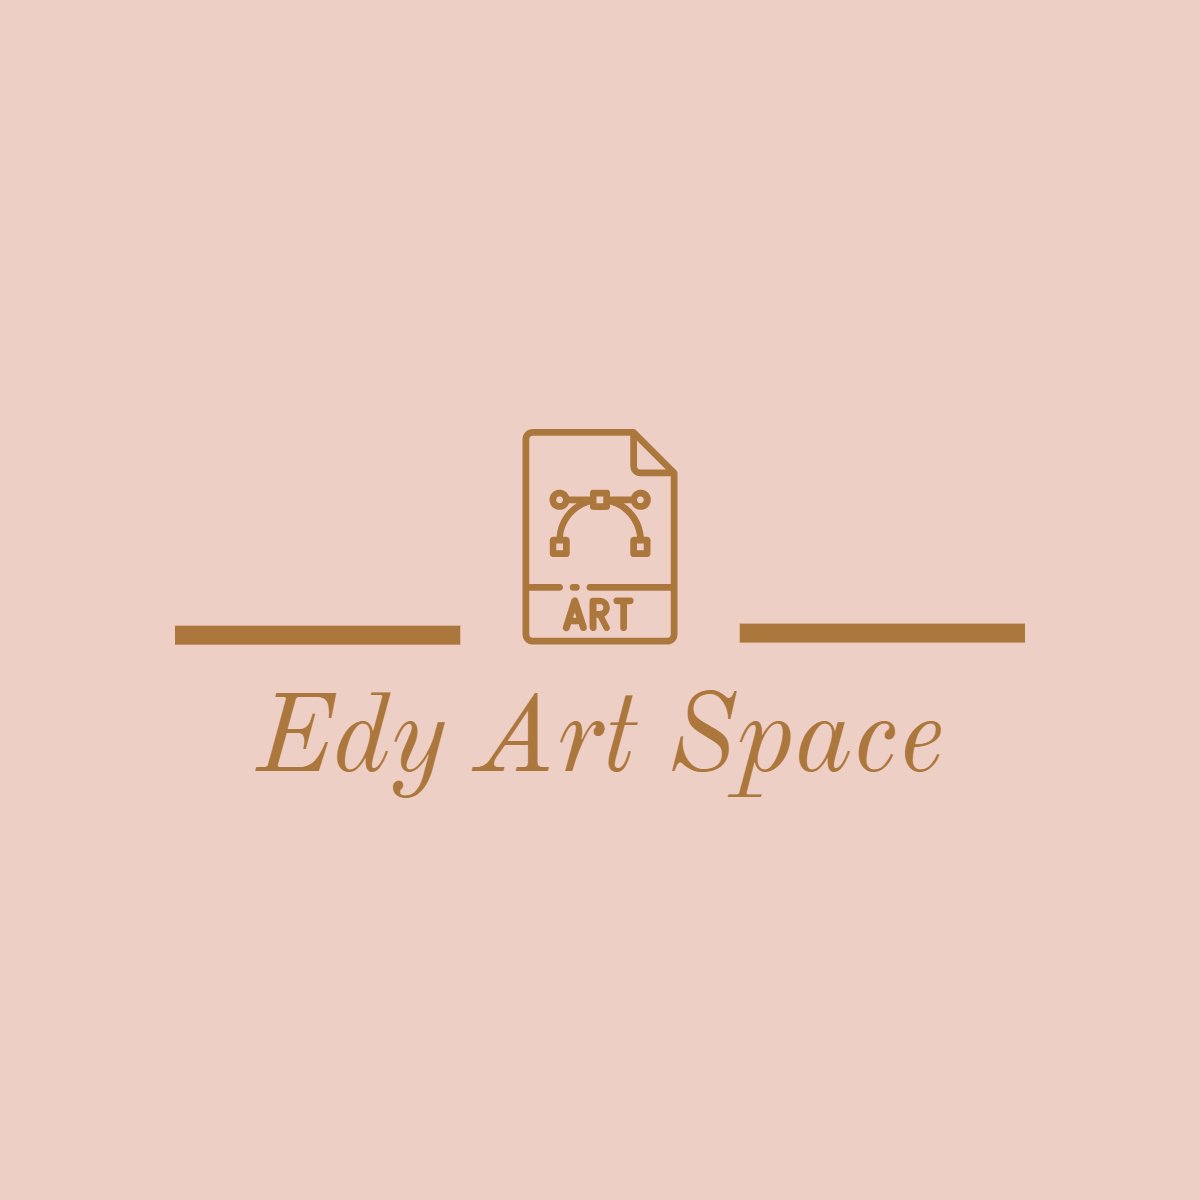 Edy Art Space